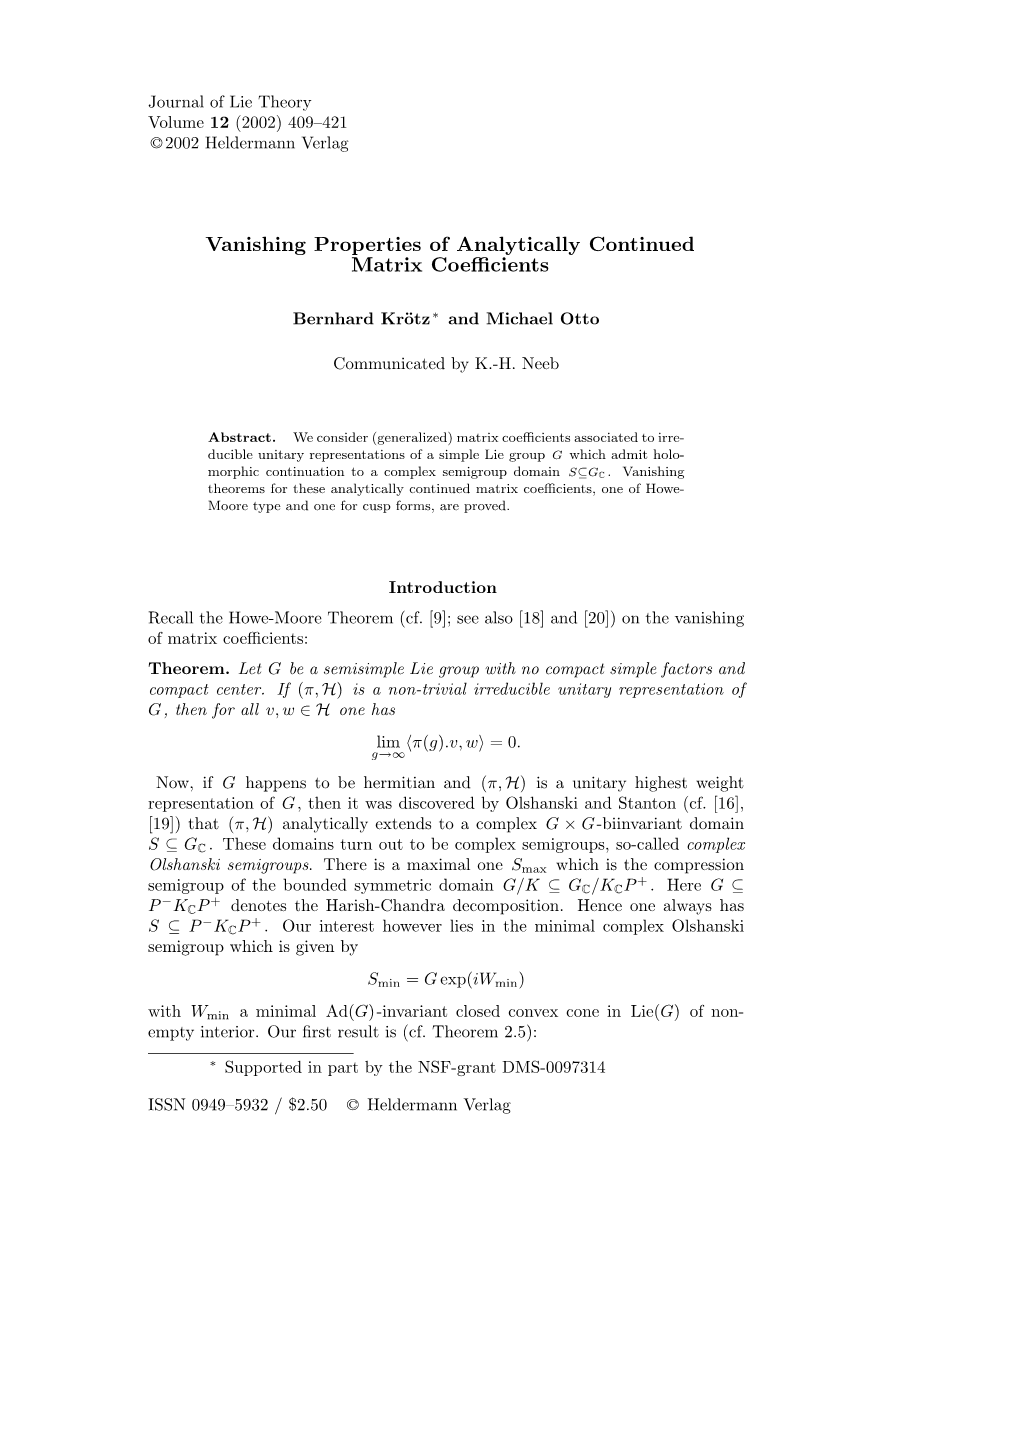 Vanishing Properties of Analytically Continued Matrix Coefficients